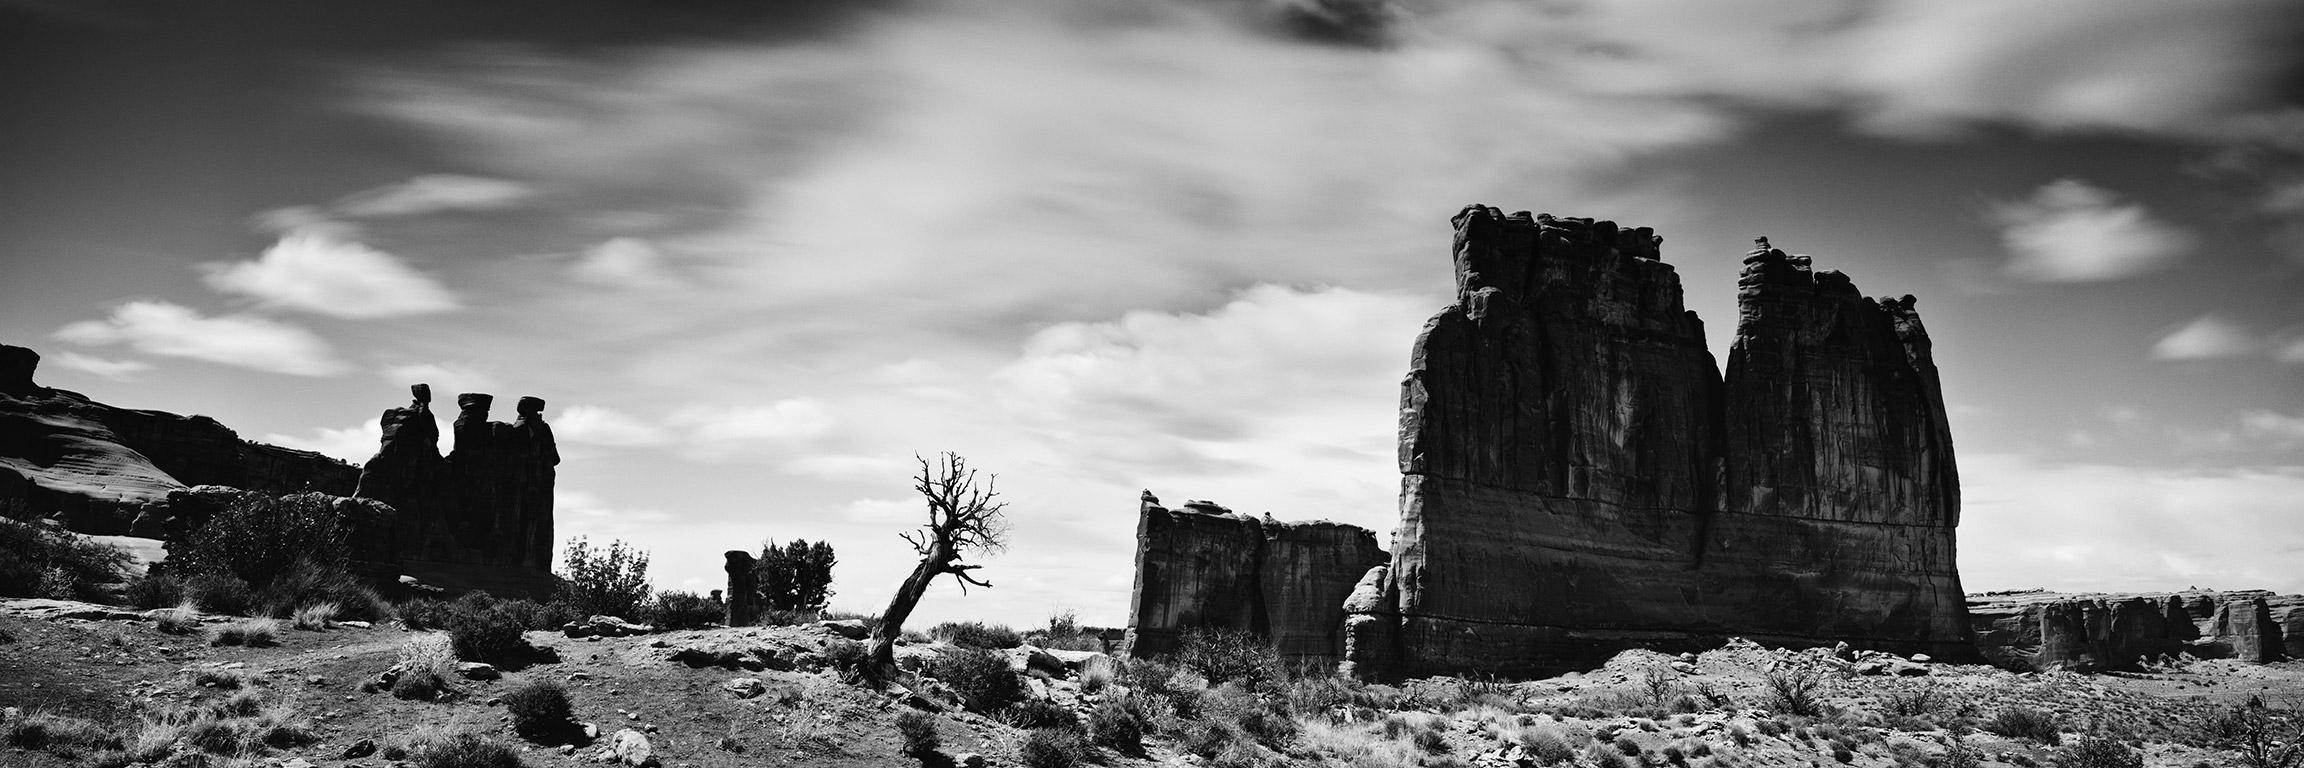 Wild West Panorama, Arches Park, Utah, USA, black & white landscape photography